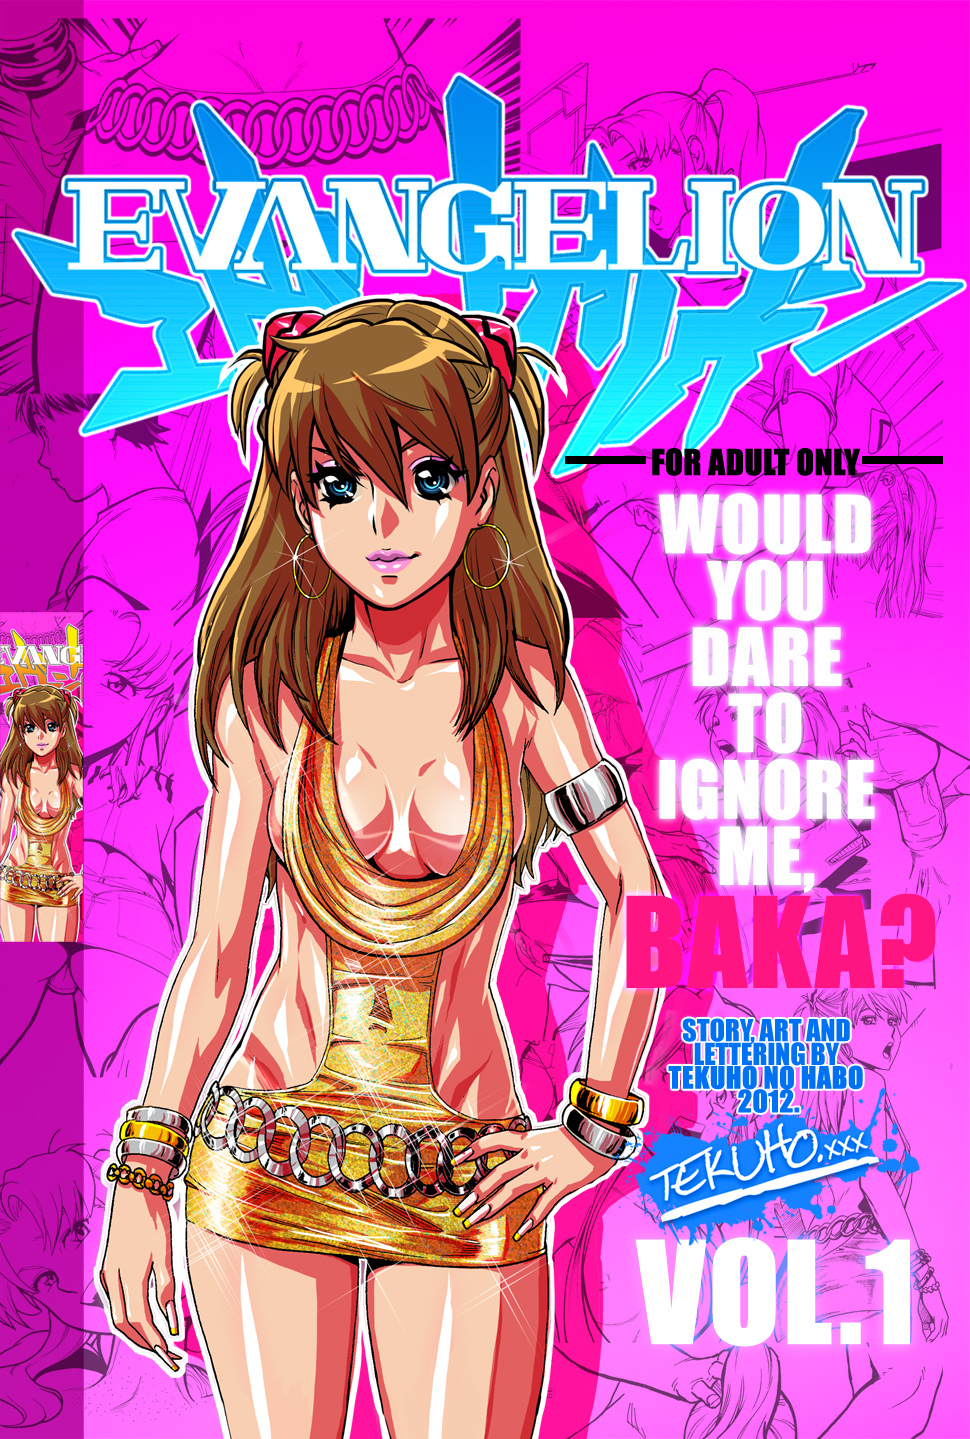 Would You Dare to Ignore Me Baka Vol. 1 Neon Genesis Evangelion00